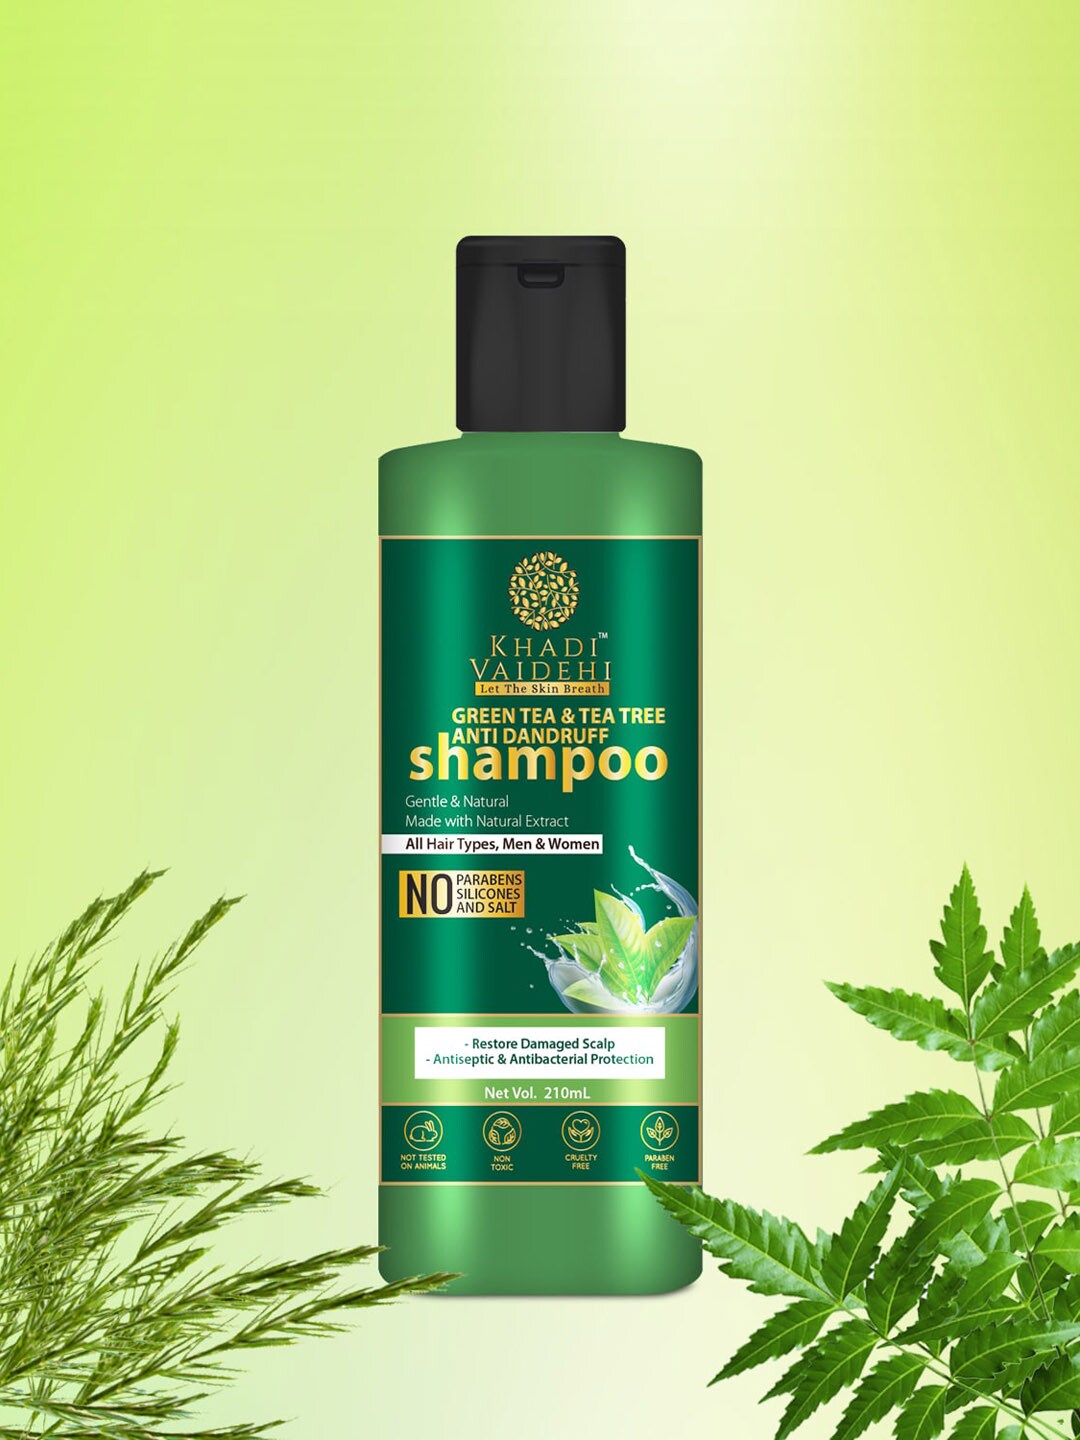 Khadi Vaidehi Green Tea & Tea Tree Paraben-Free Anti-Dandruff Shampoo - 210 ml Price in India